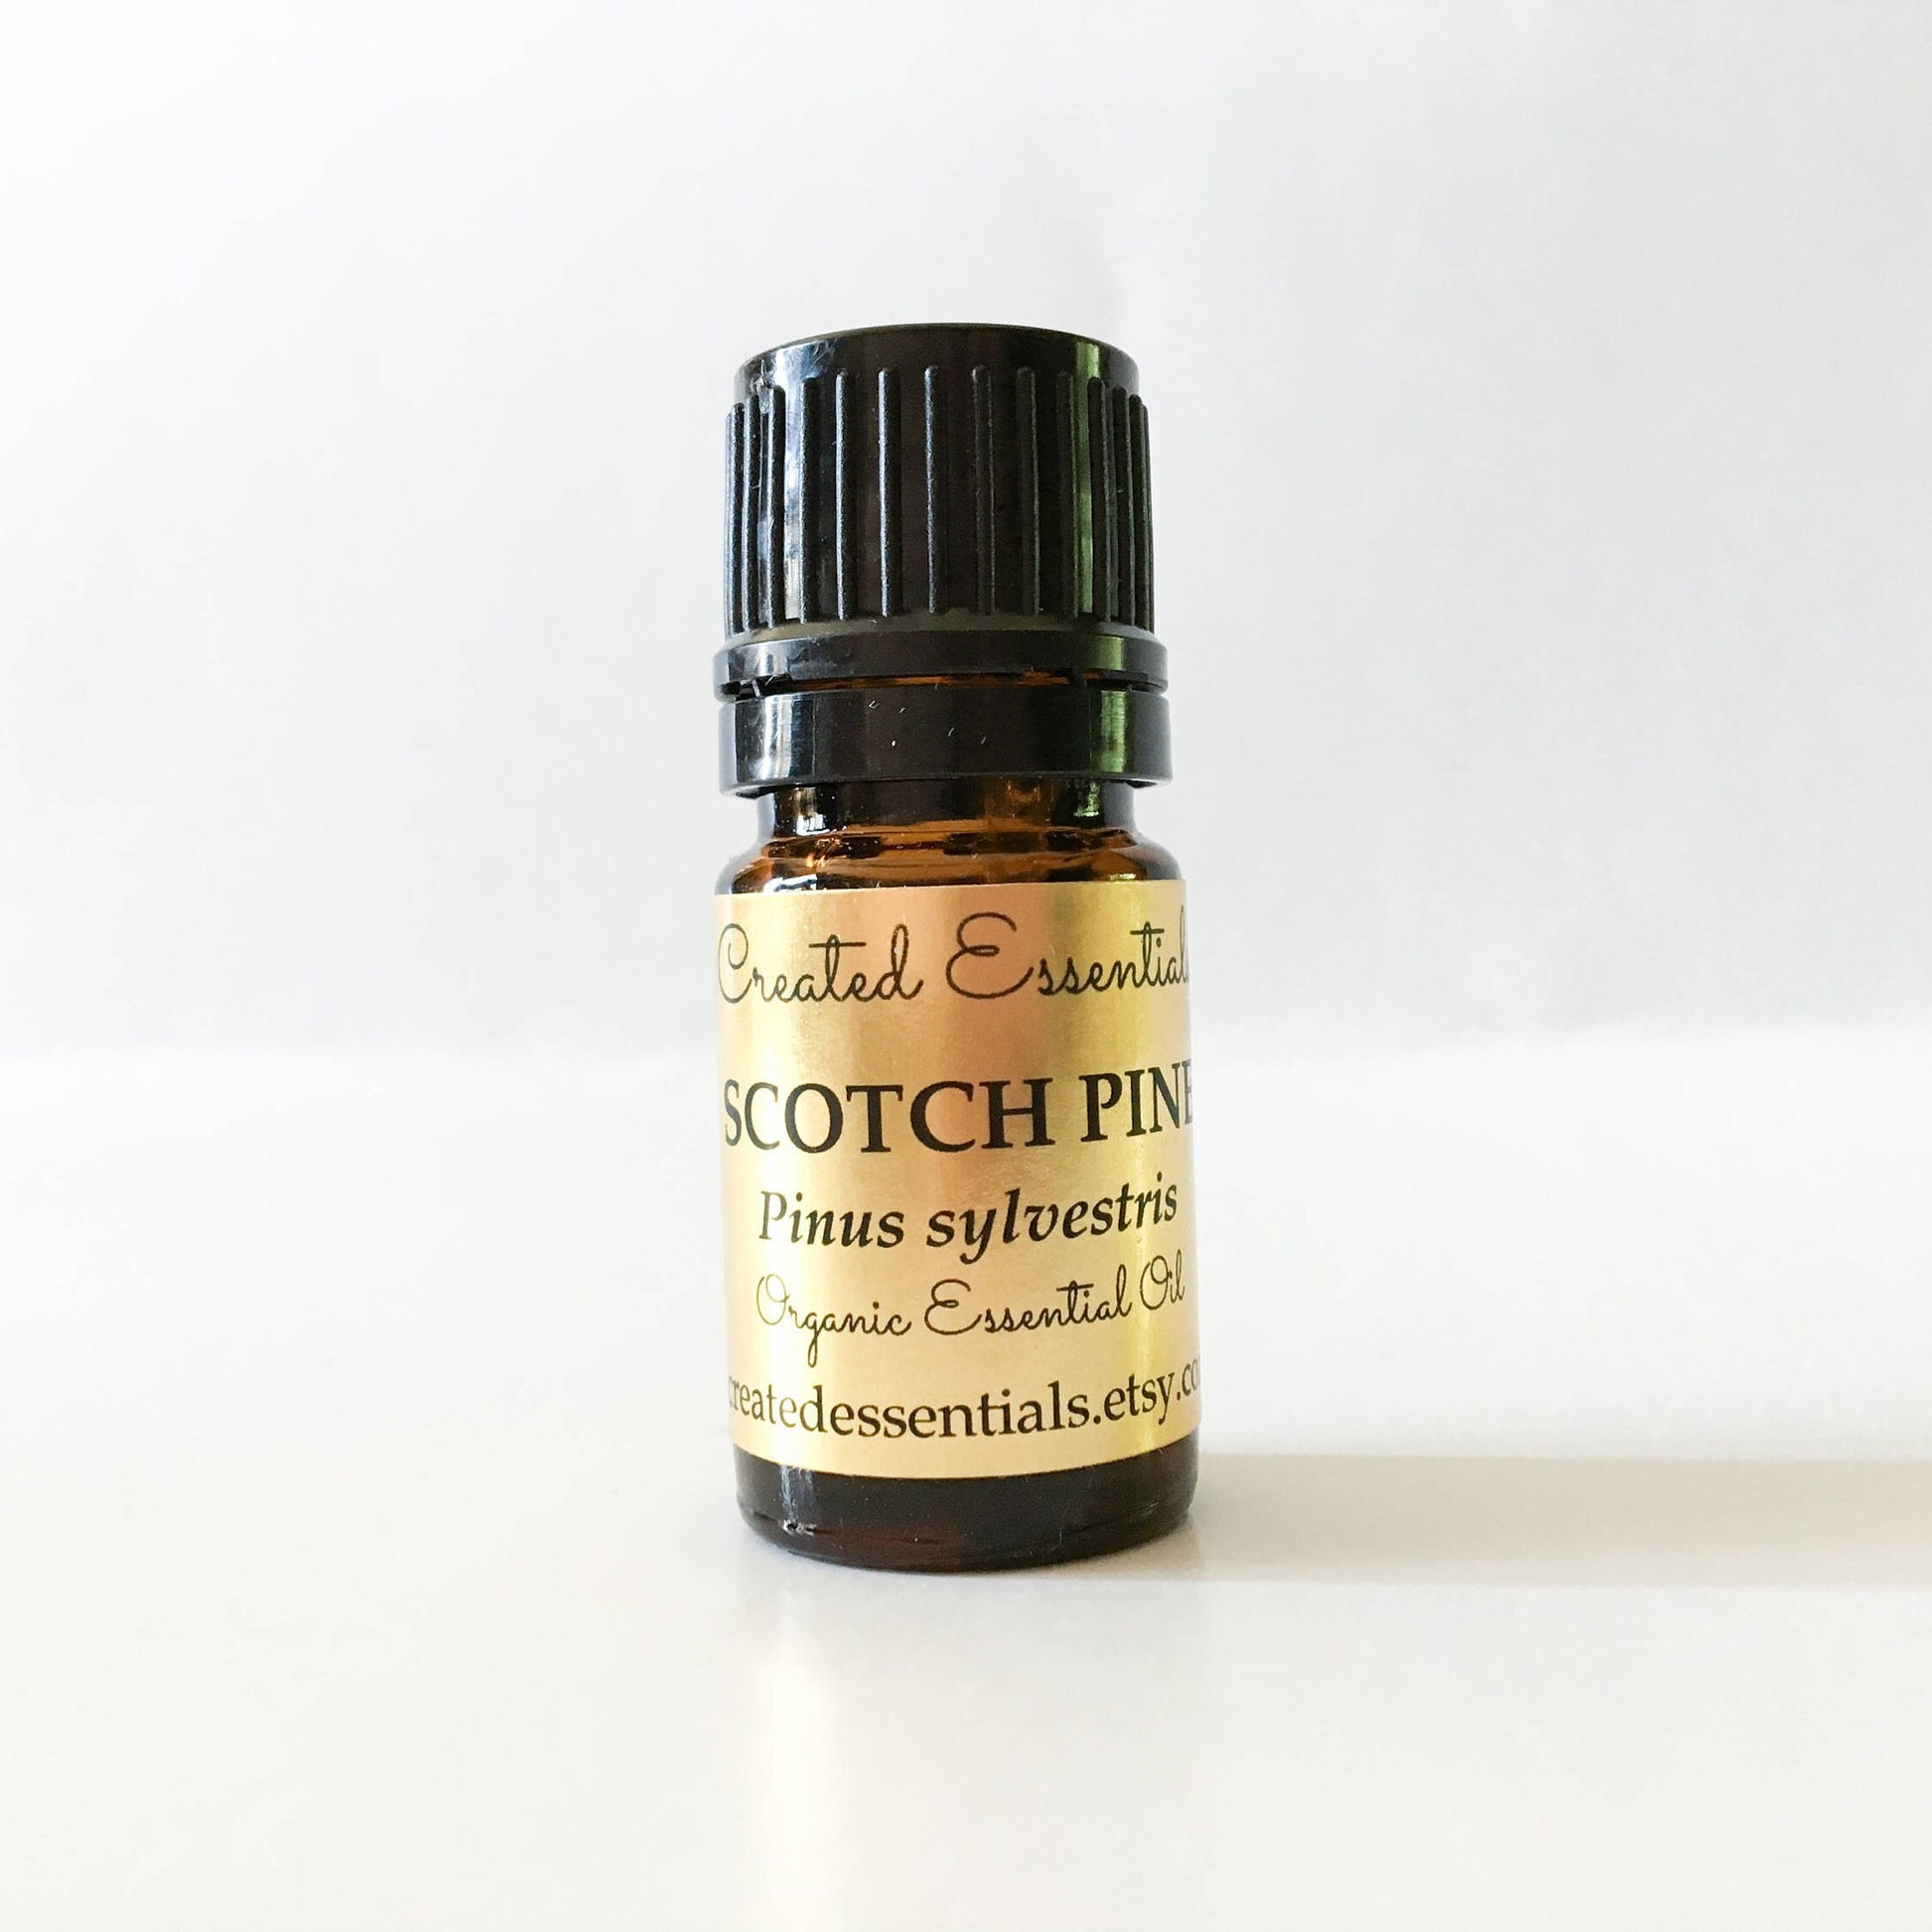 Scotch Pine Essential Oil | 100% Pure Essential Oil of Scotch Pine | Therapeutic Essential Oil of Scotch Pine| Aromatherapy